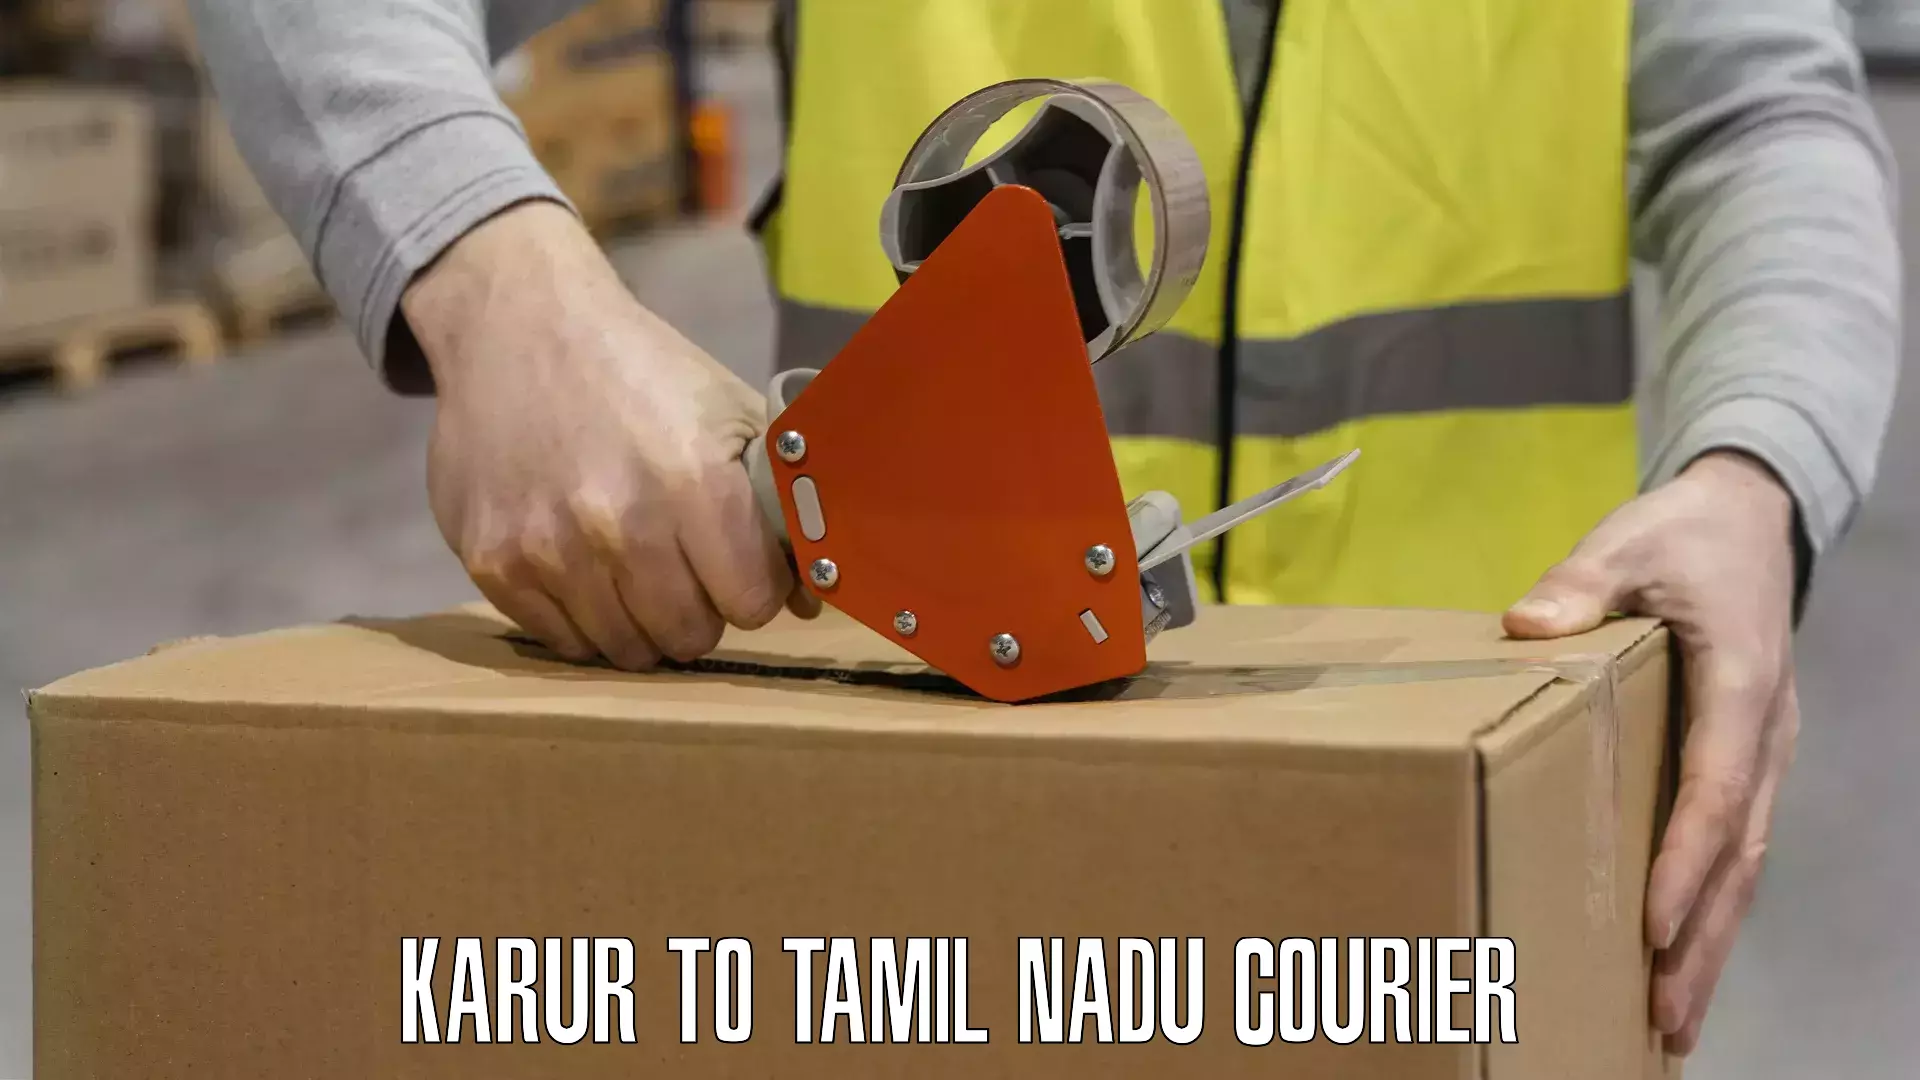 Full-service courier options Karur to Mannargudi